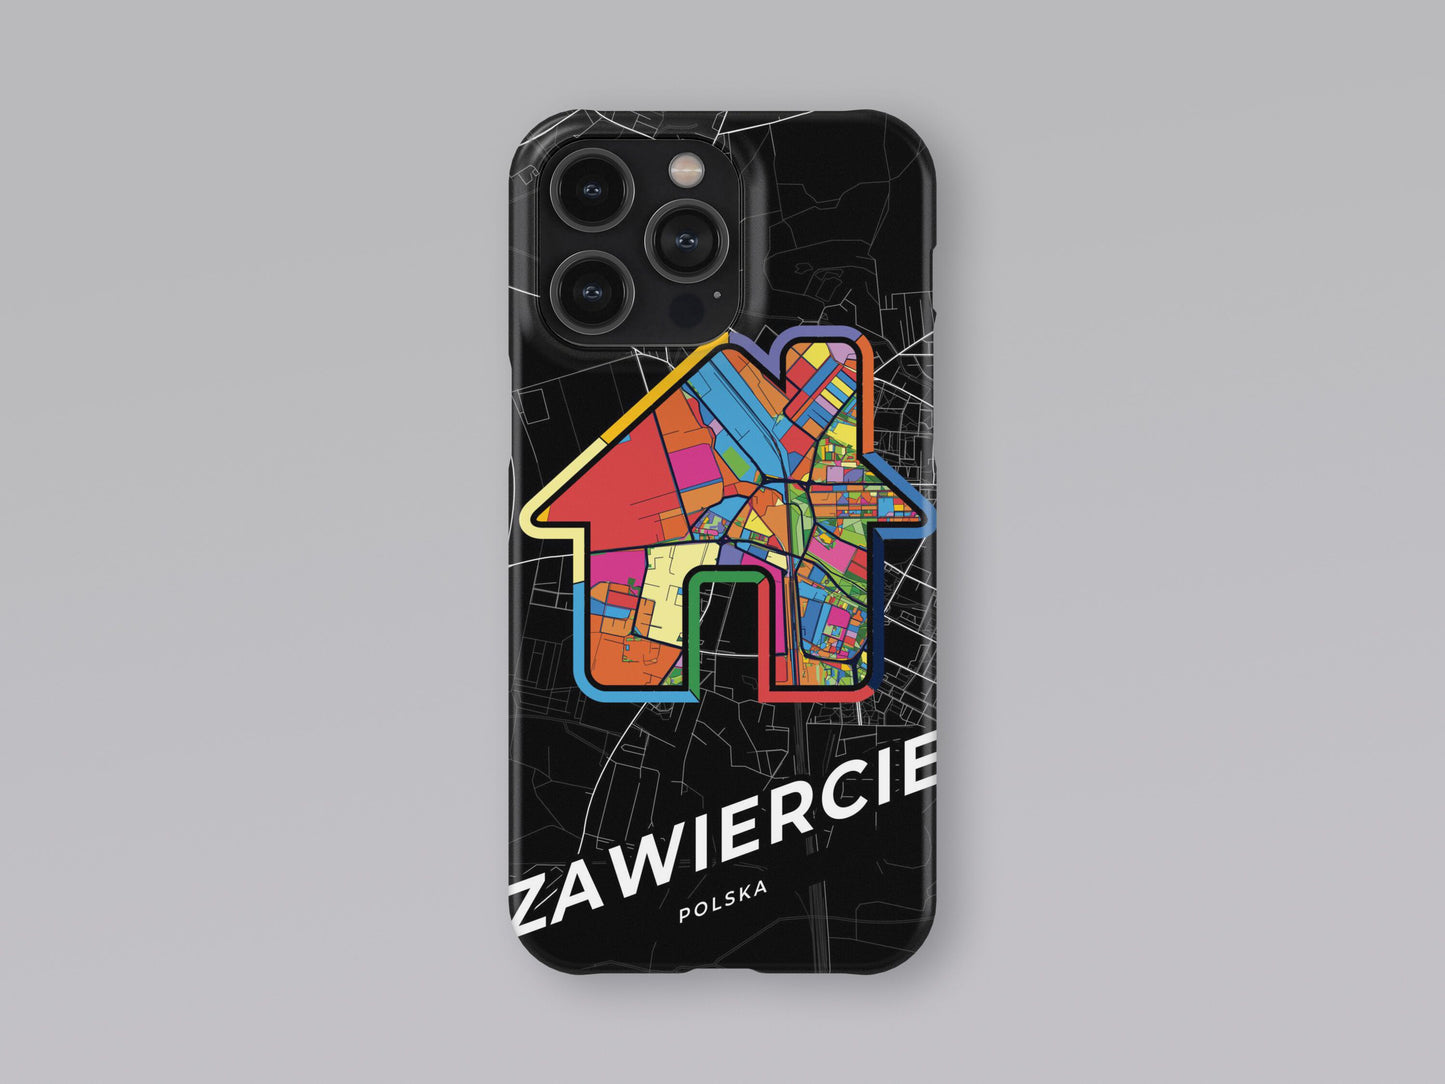 Zawiercie Poland slim phone case with colorful icon 3